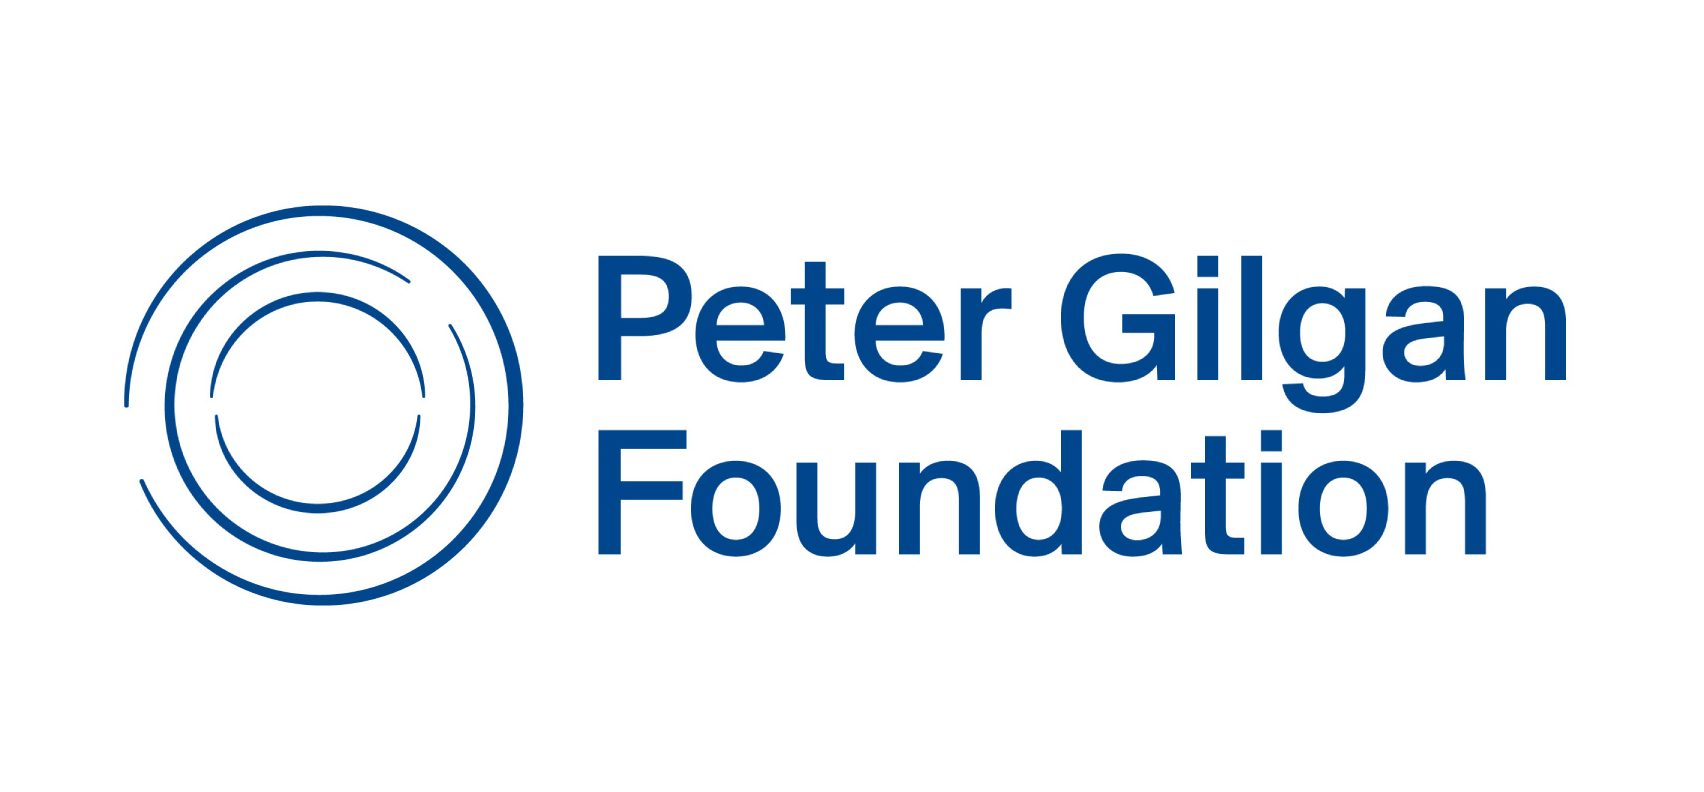 Peter Gilgan Foundation